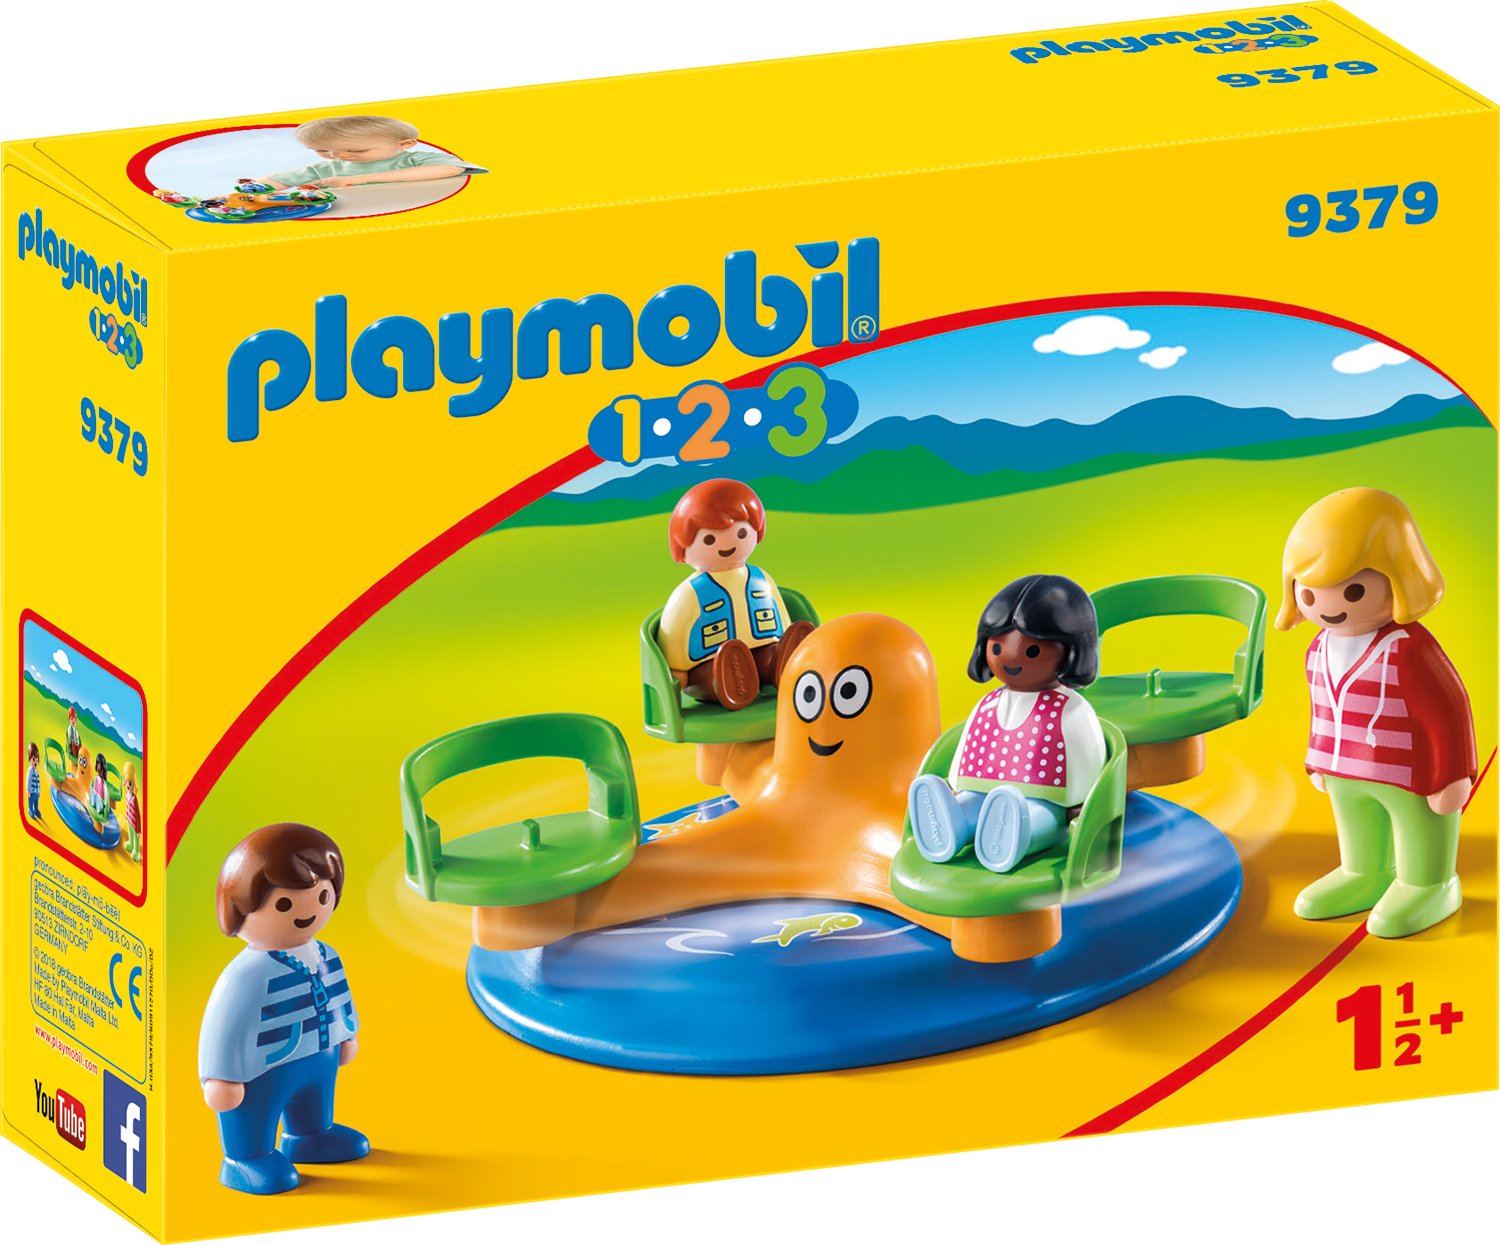 Playmobil 9379 – Carousel Toy